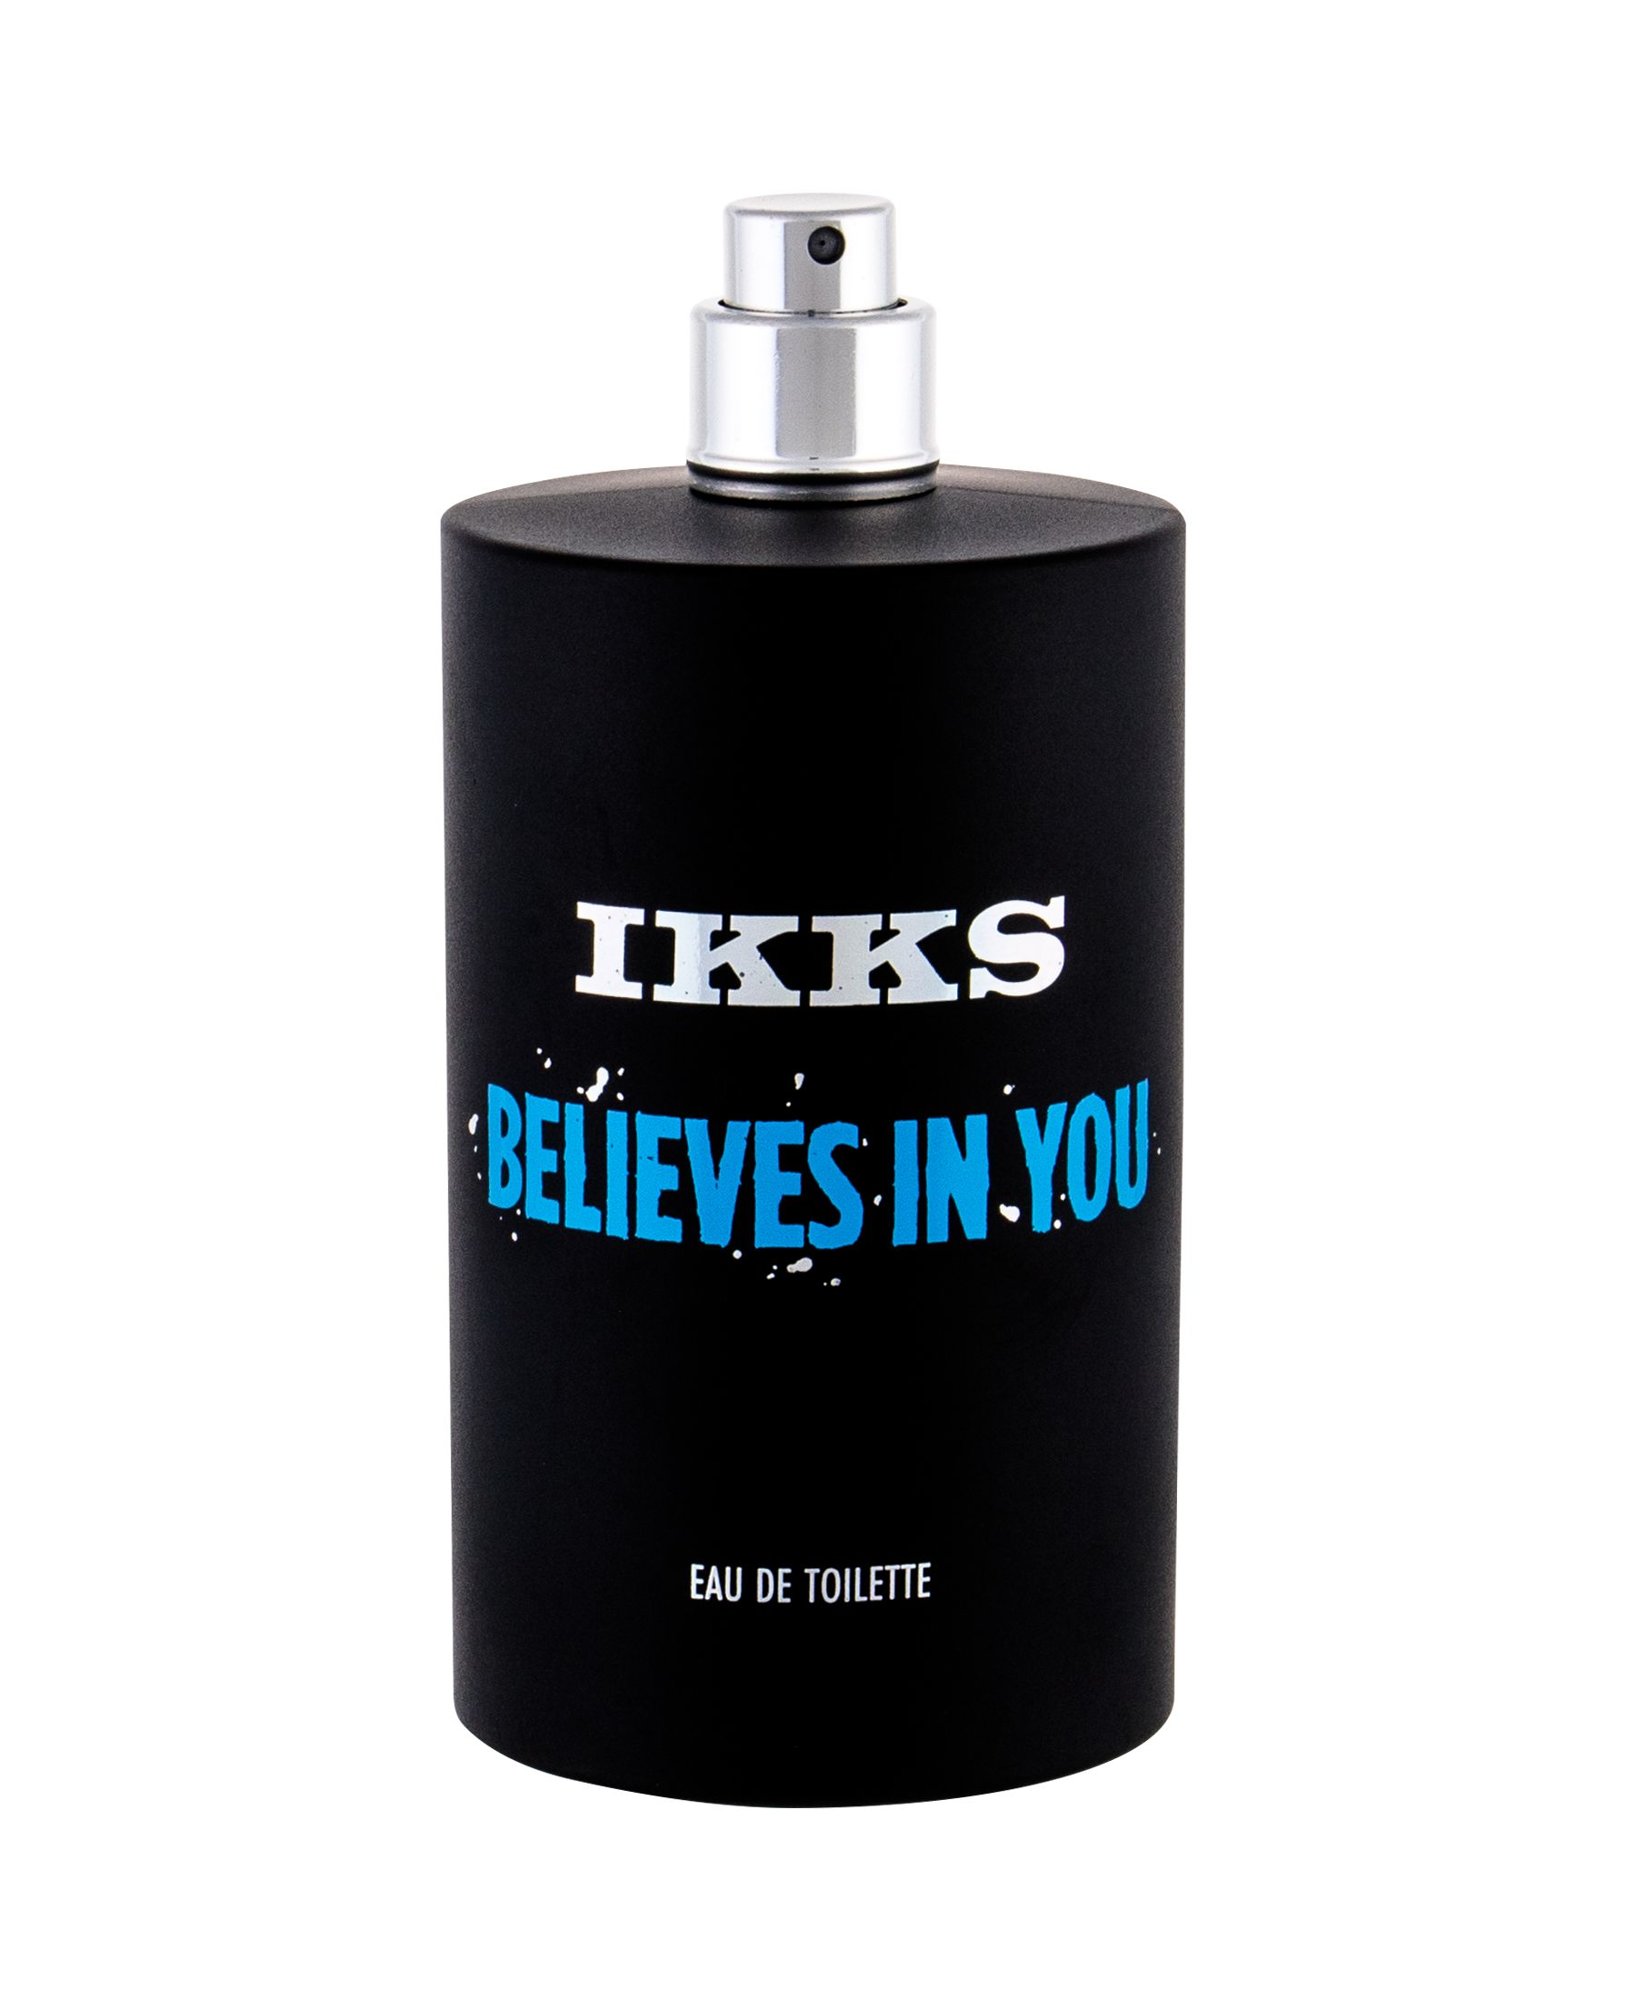 Ikks Believes in You